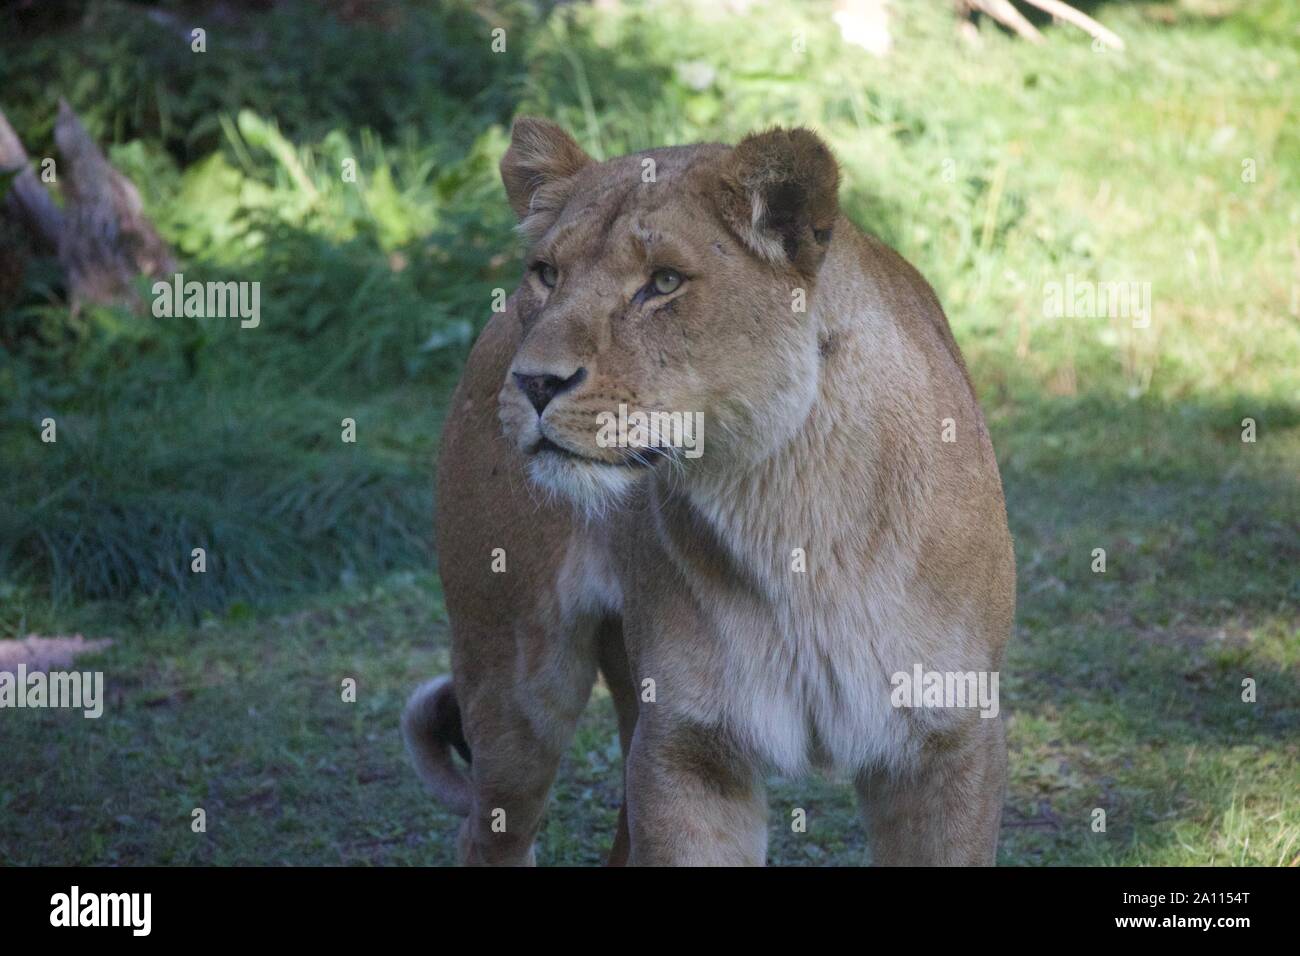 Un orgullo un leones disfrutando del sol. Fotos tomadas en Longleat Safari Park Foto de stock